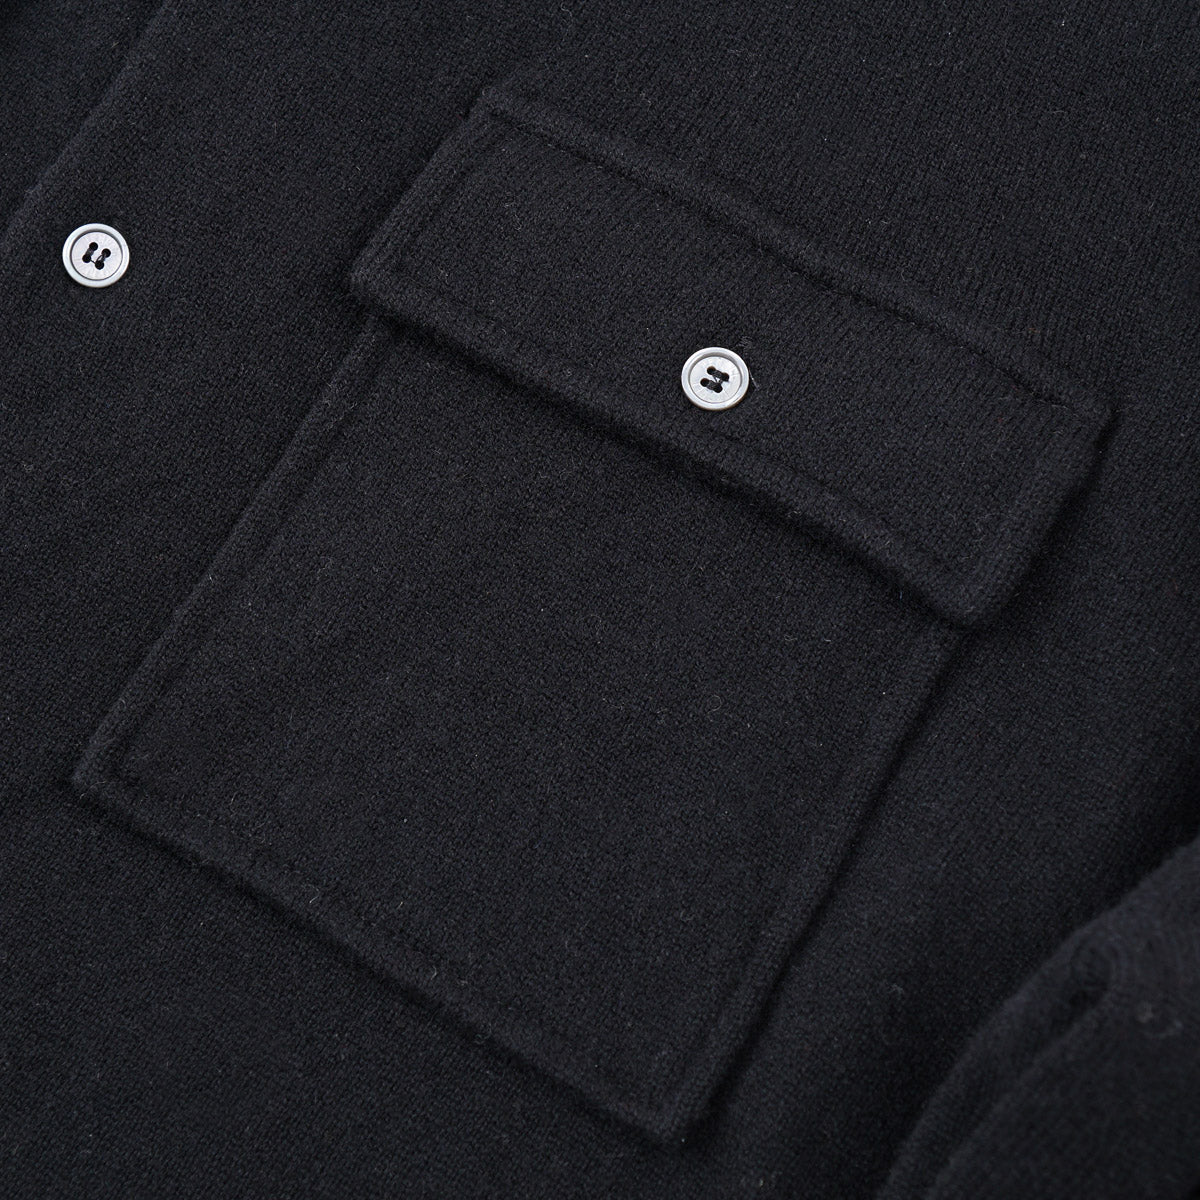 Fedeli Knit Cashmere Overshirt-Sweater - Top Shelf Apparel